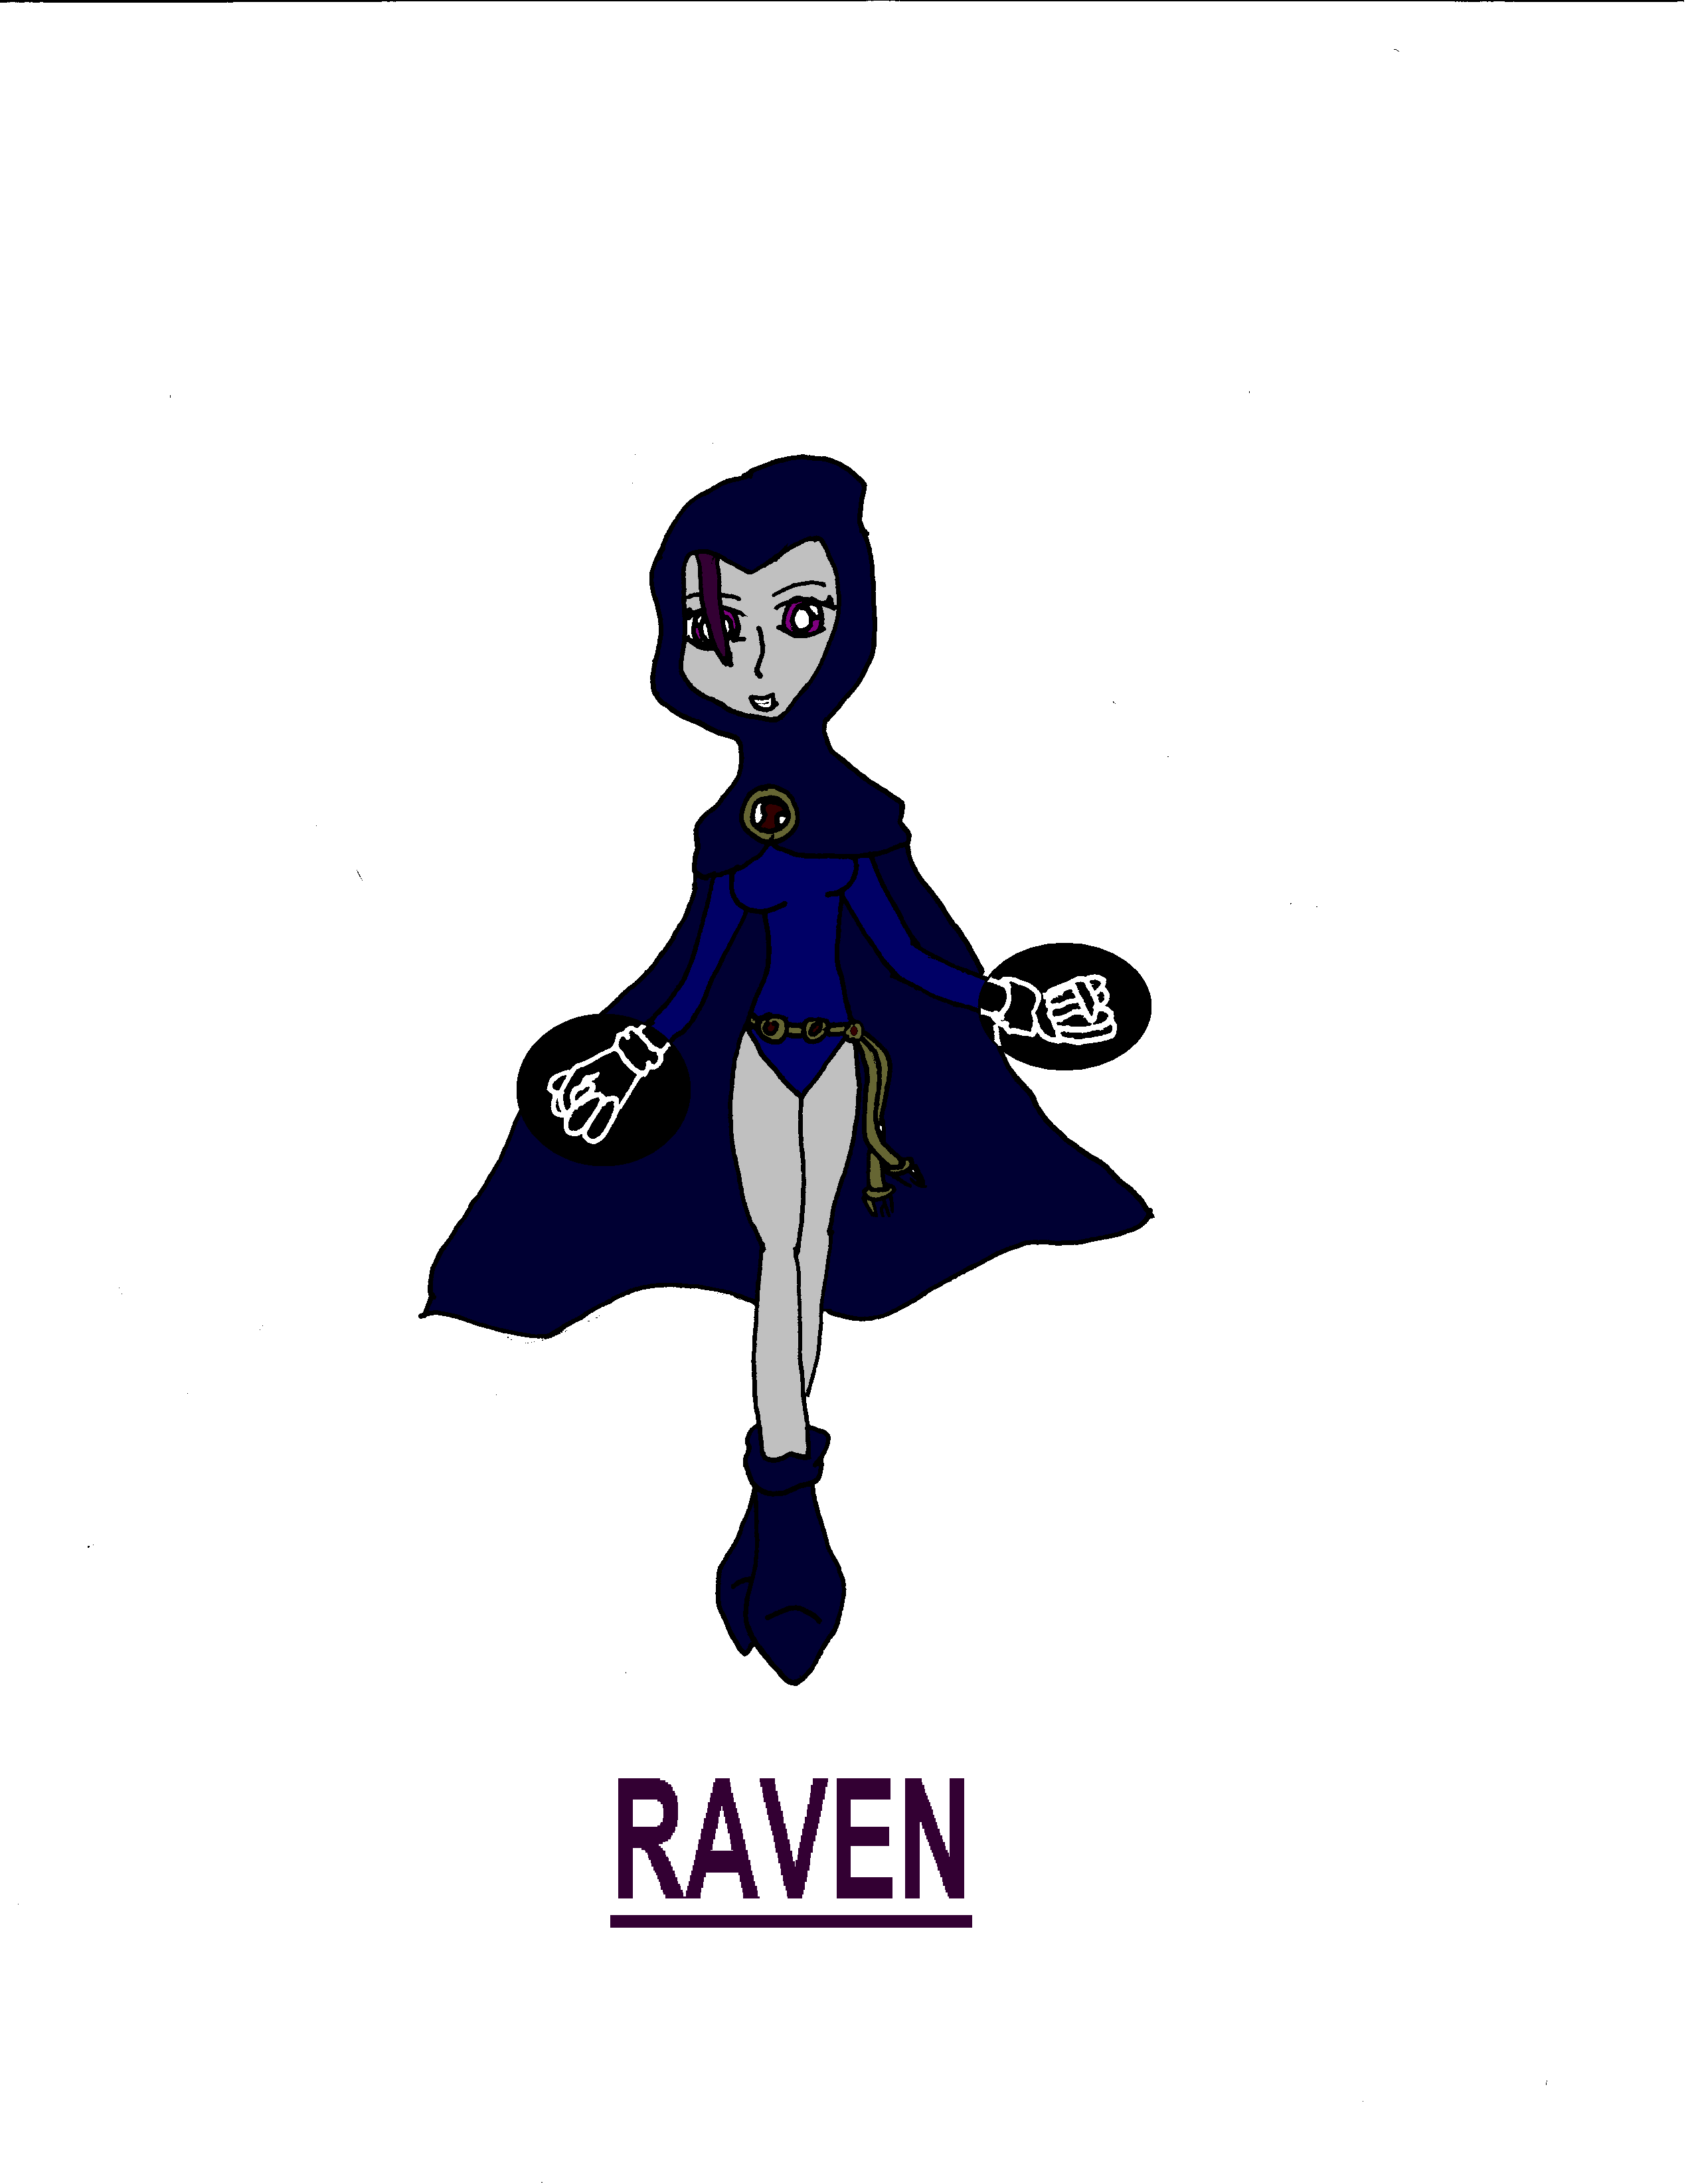 I'm Raven by luminarylegacy33